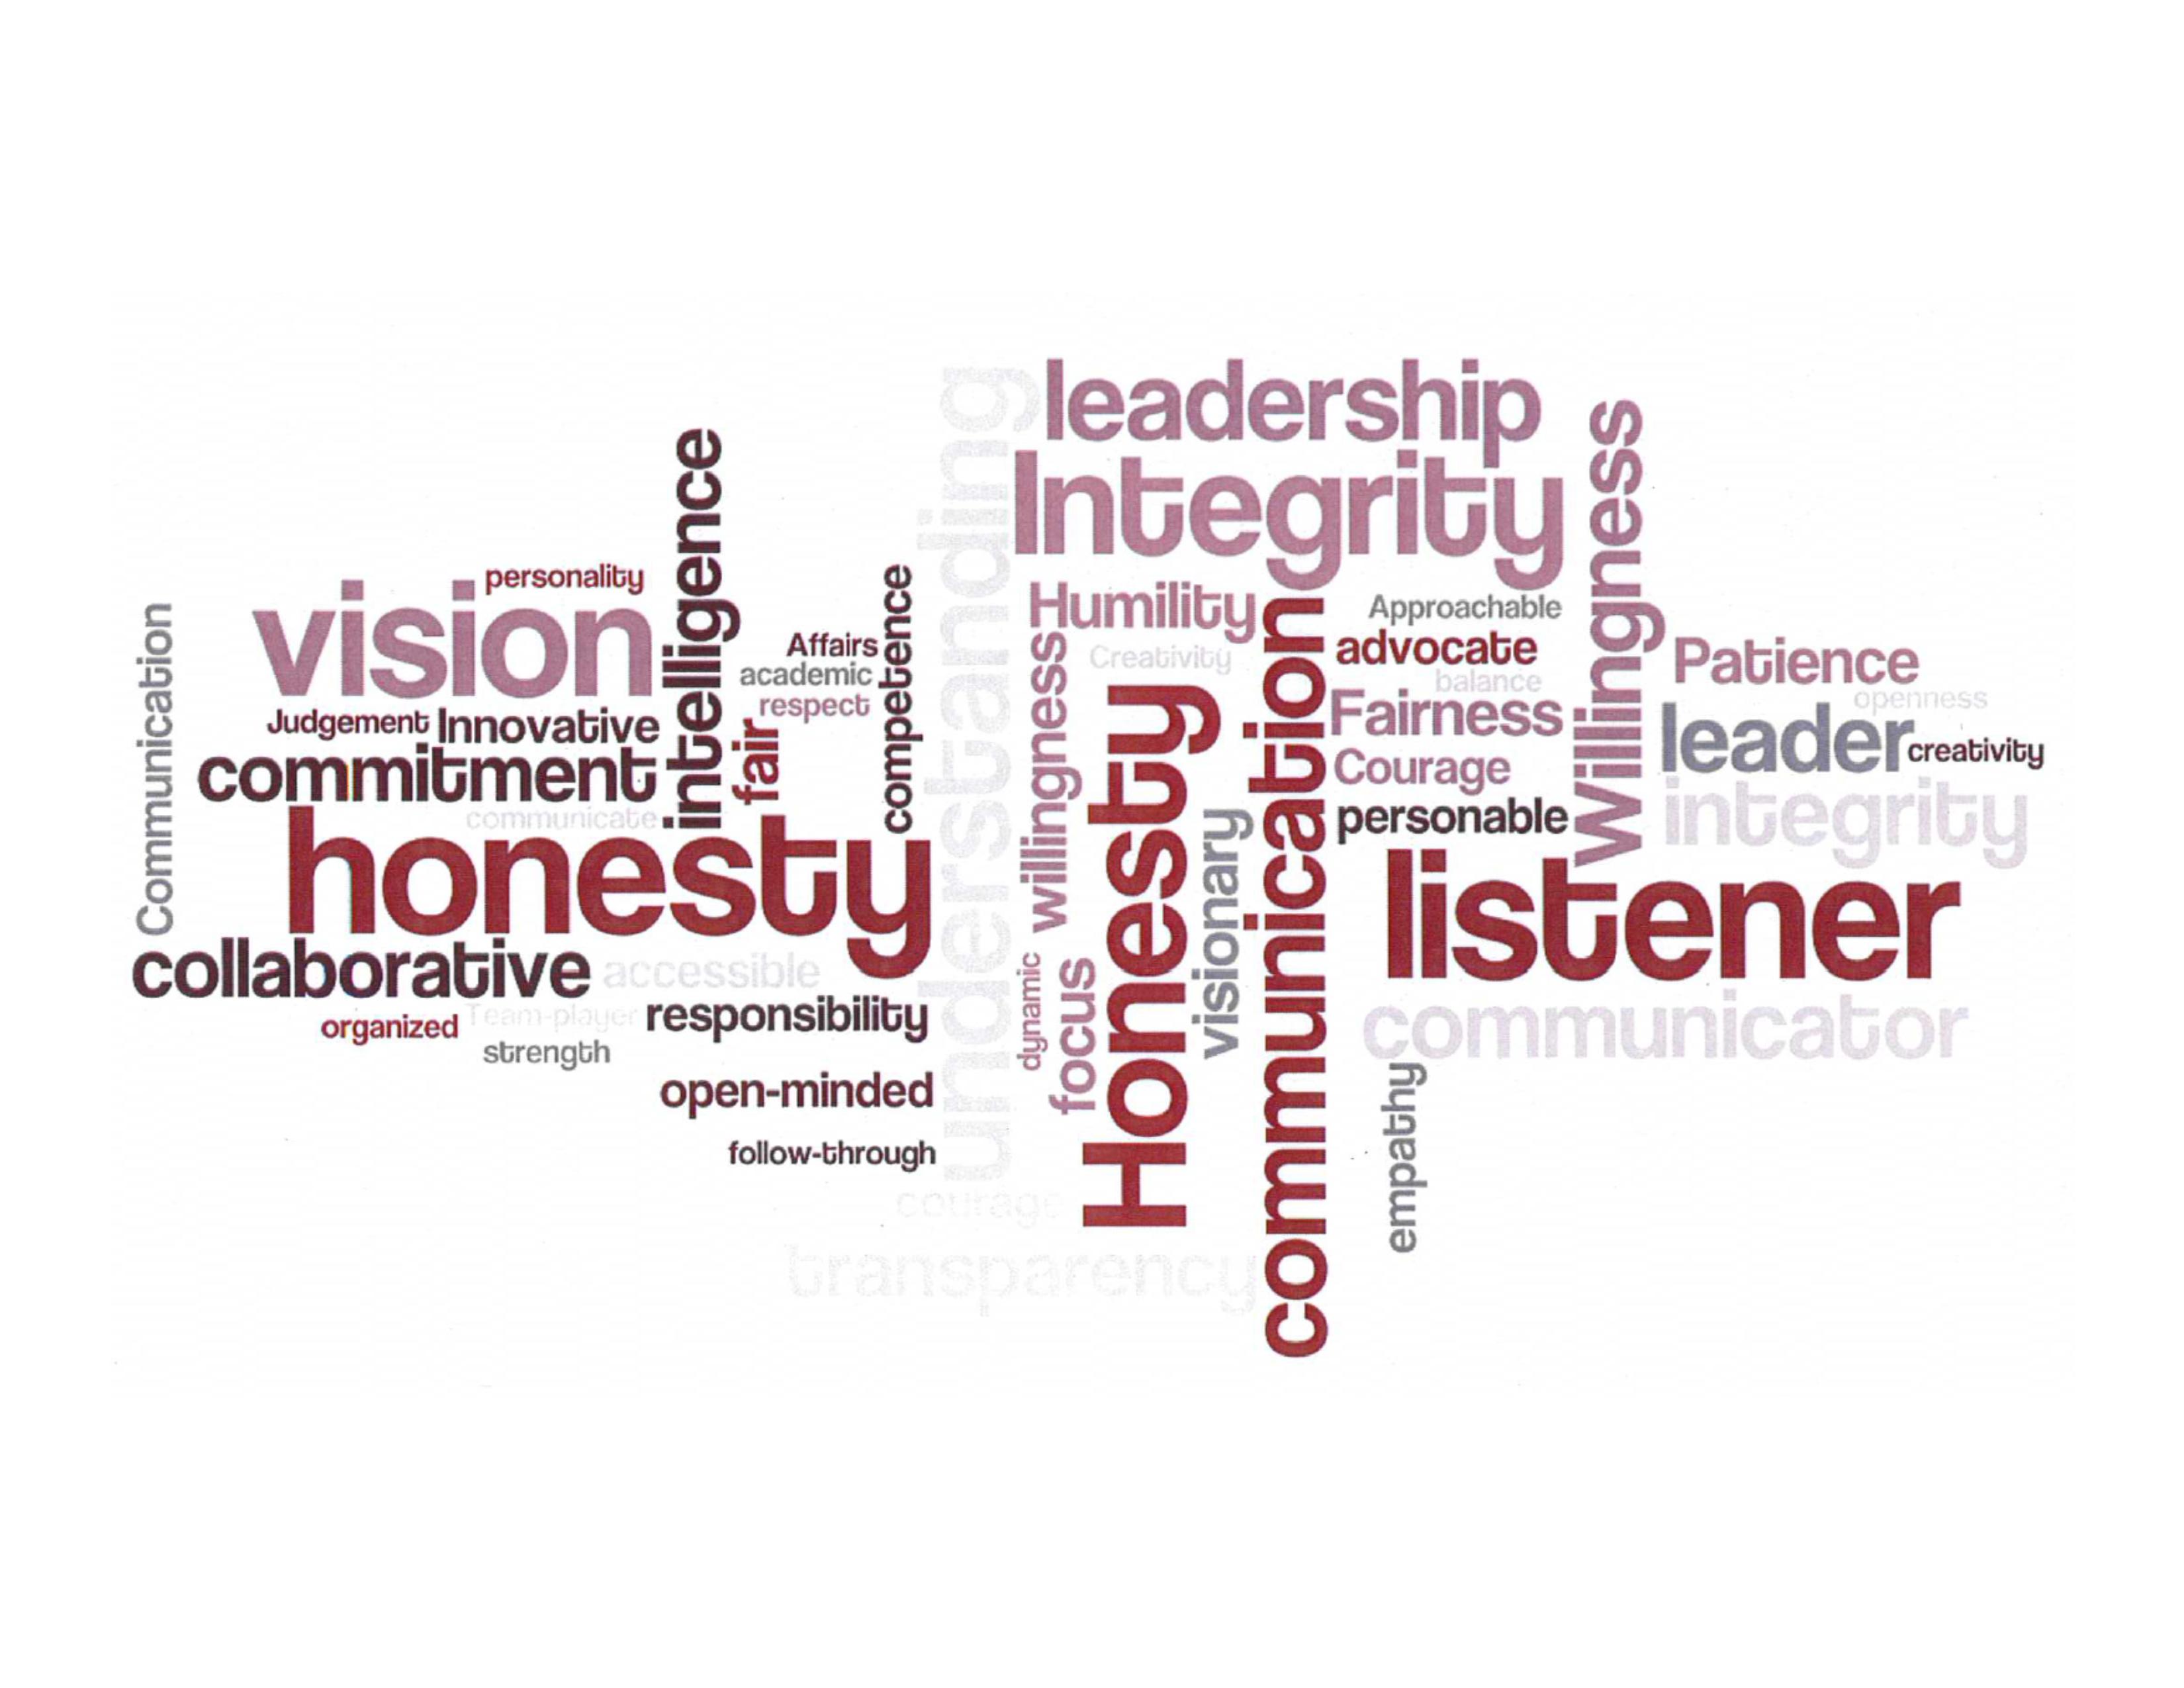 honesty, communication, listener, vision, integrity, leadership